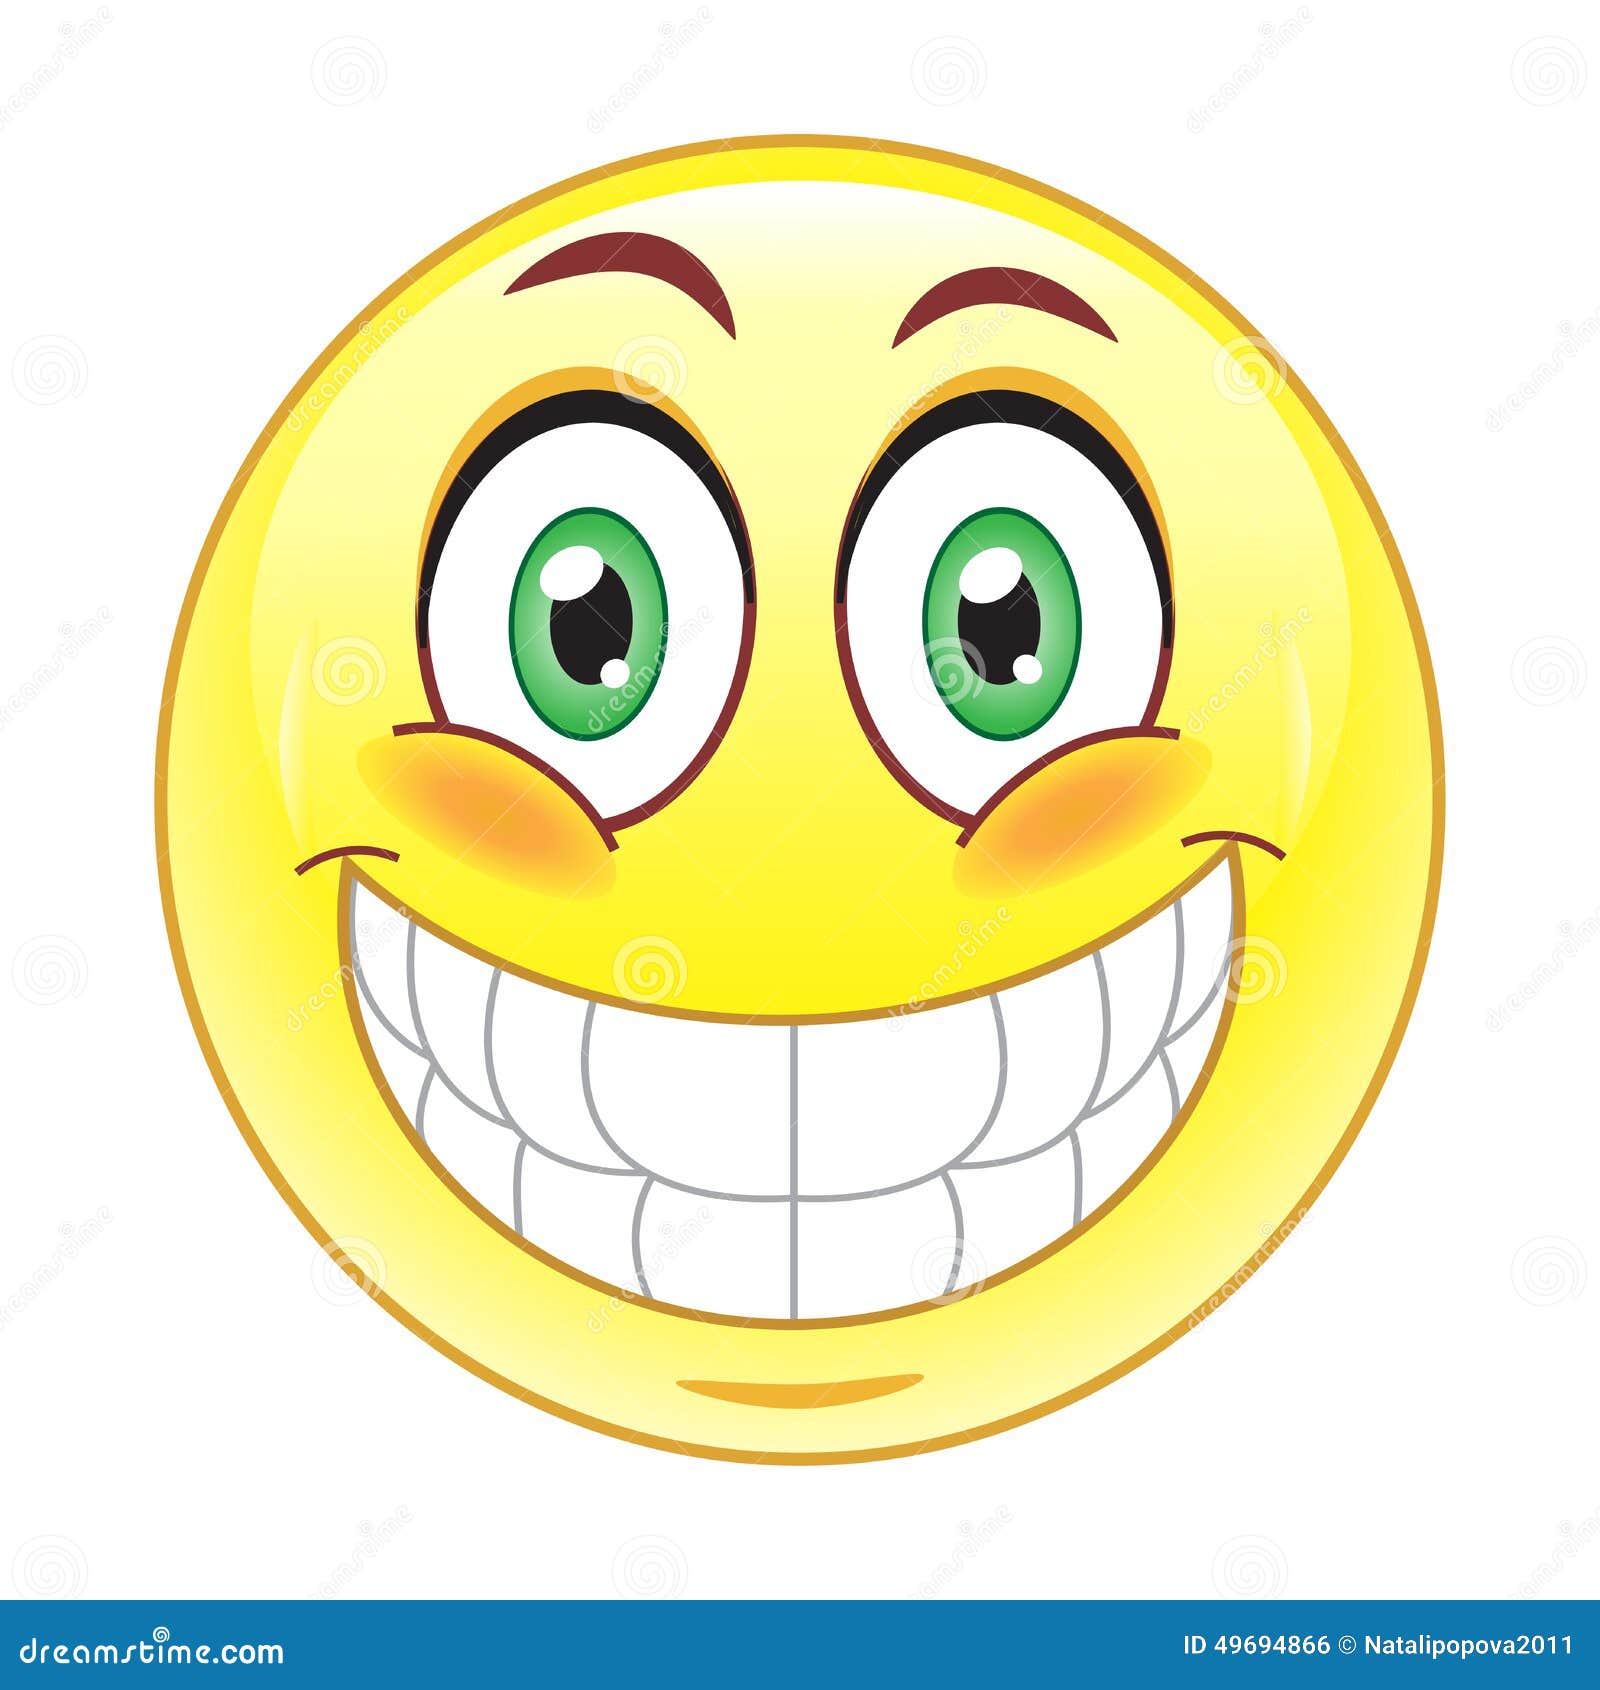 Big smile emoticon stock vector. Illustration of mascot - 49694866